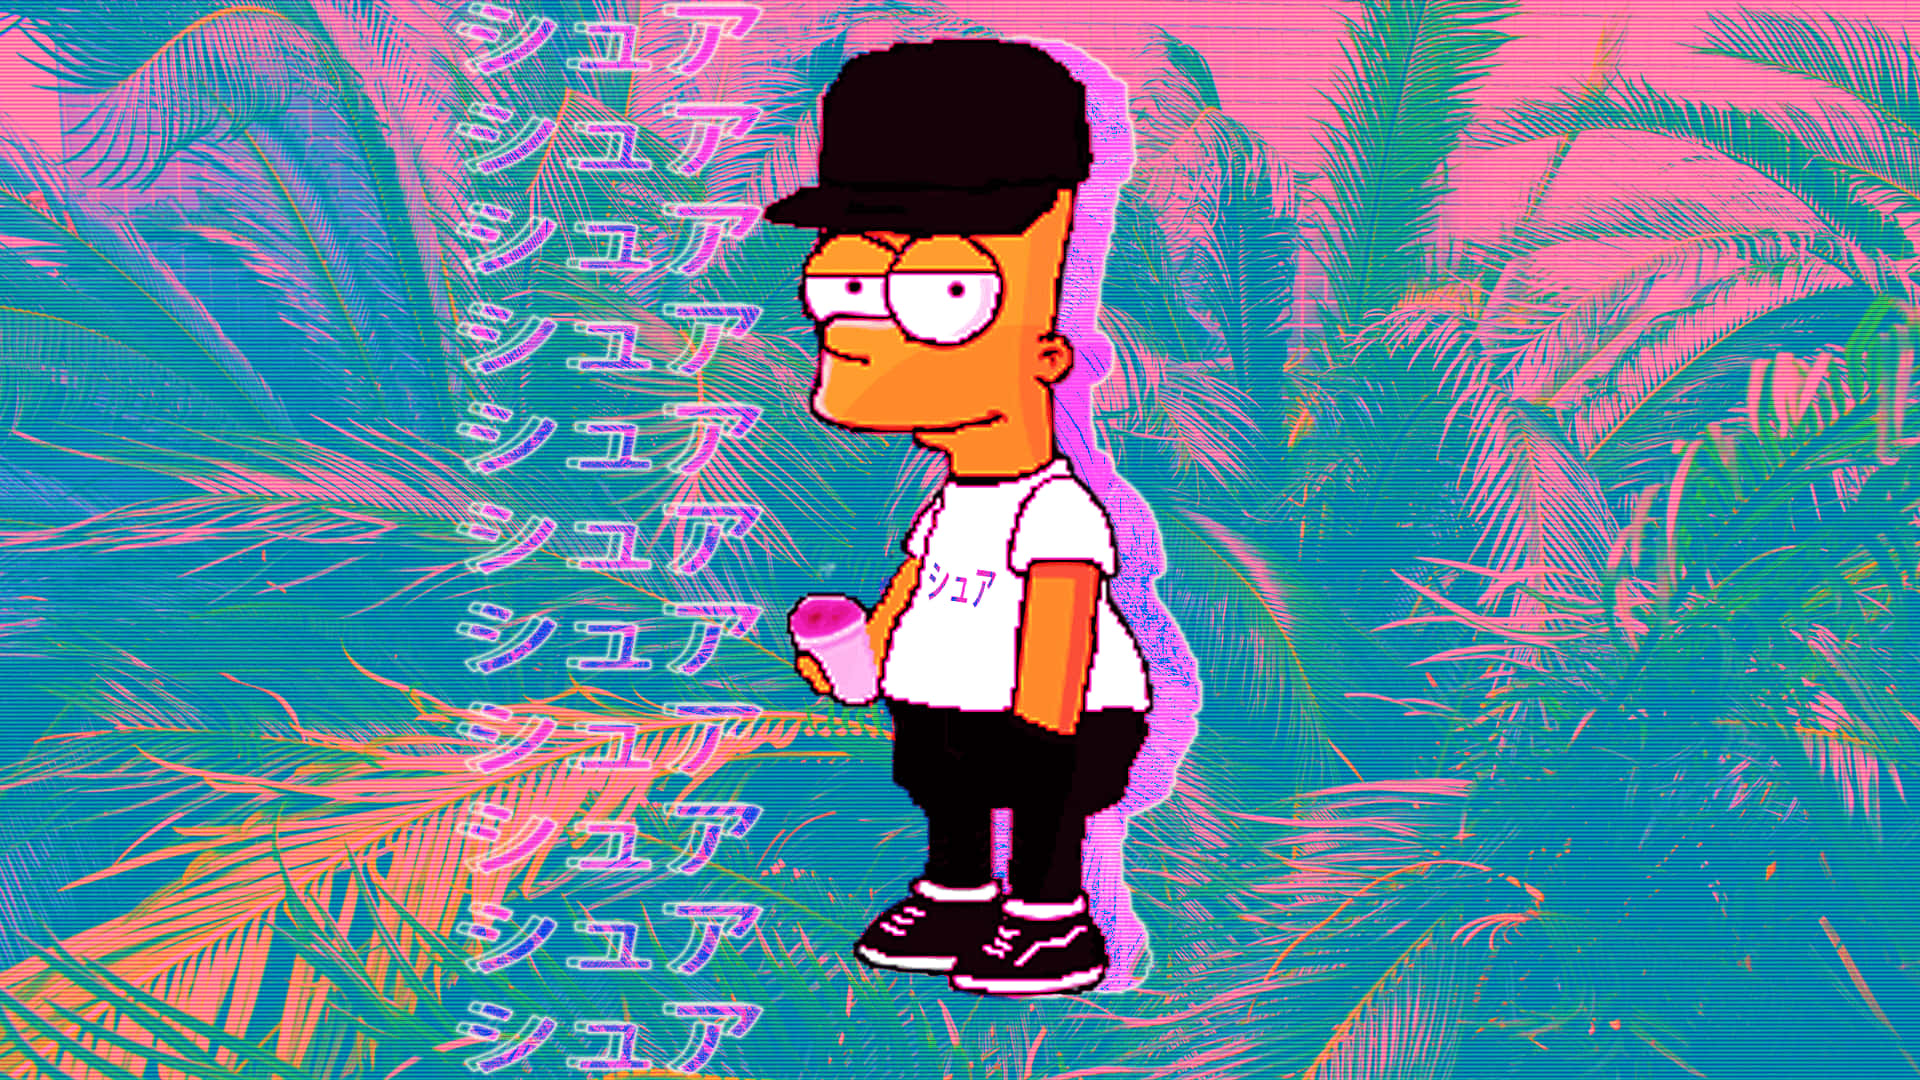 100+] Supreme Bart Simpson Wallpapers